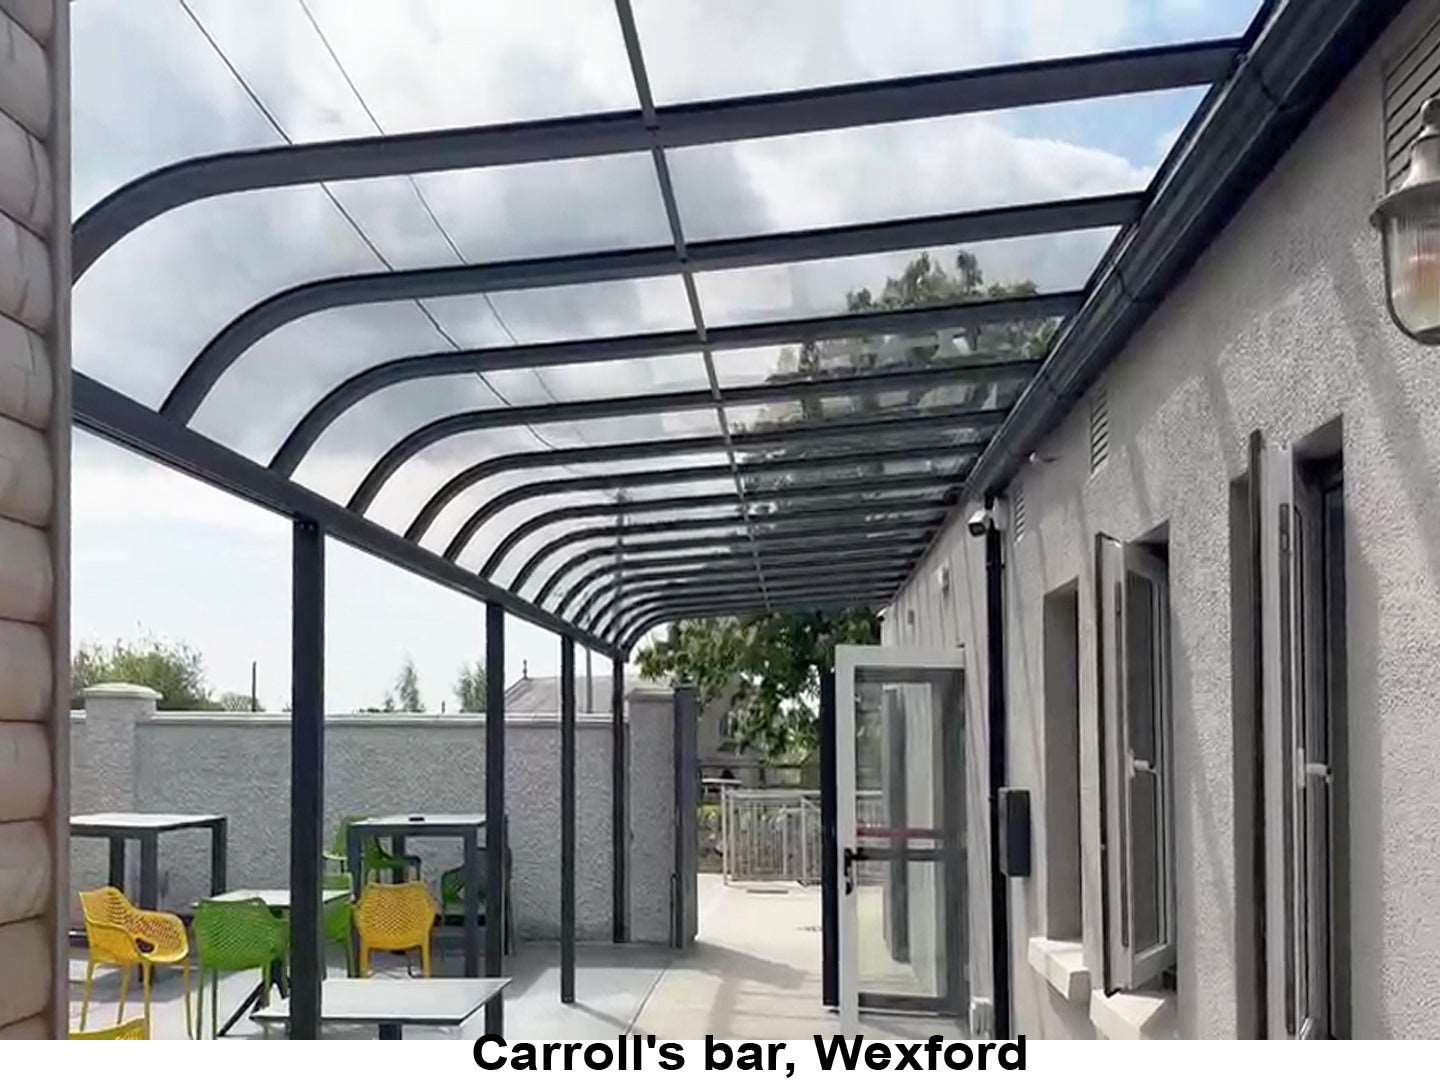 Carroll's bar, Wexford